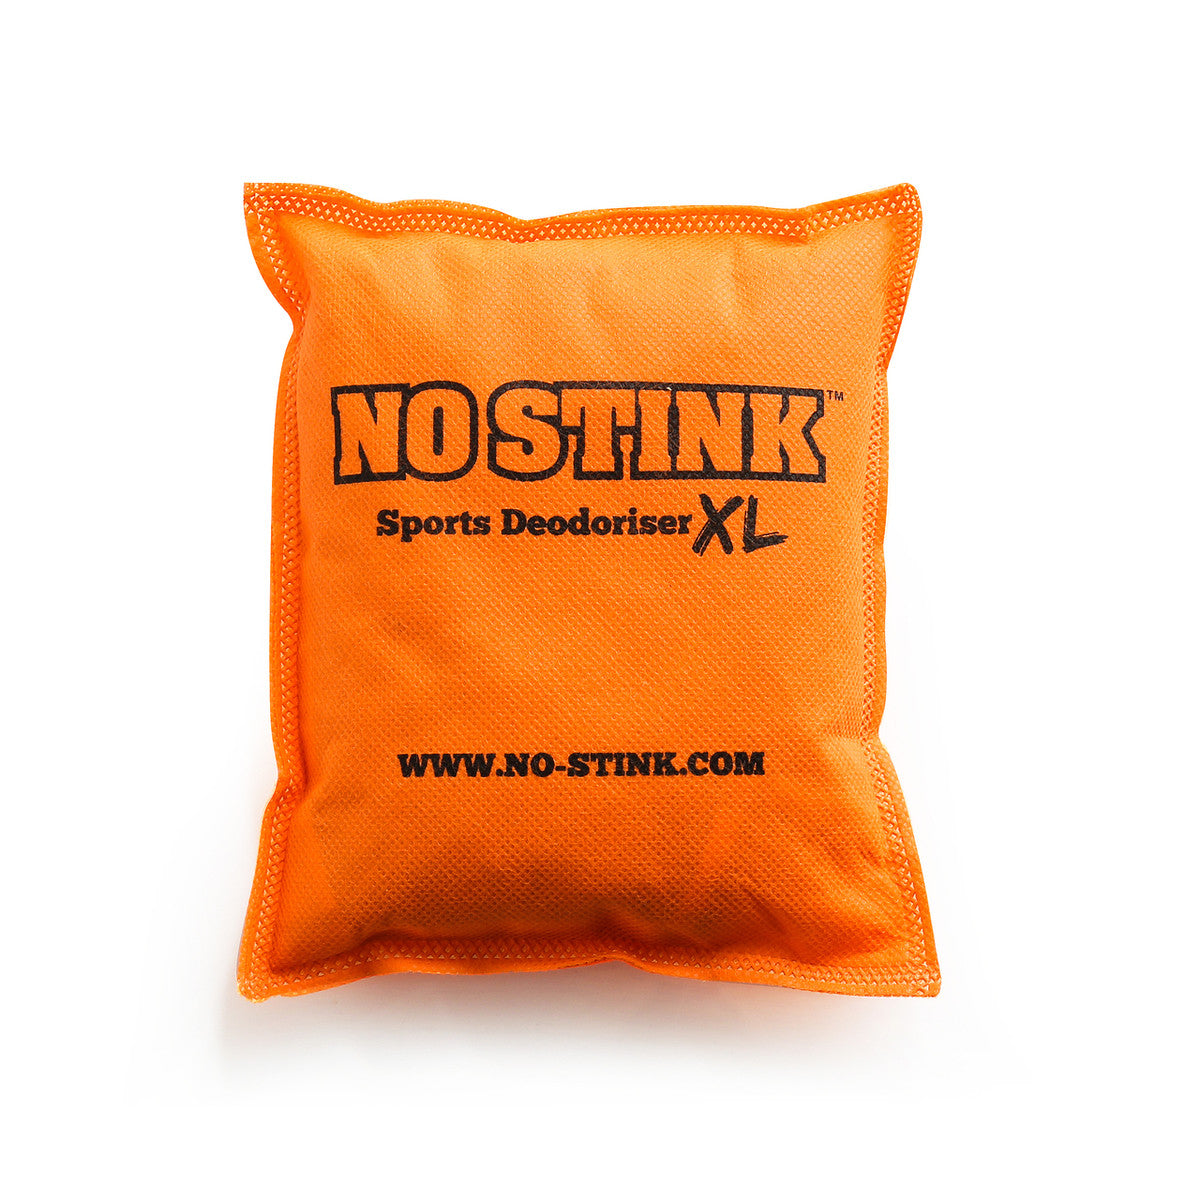 No Stink Sports Deodoriser XL